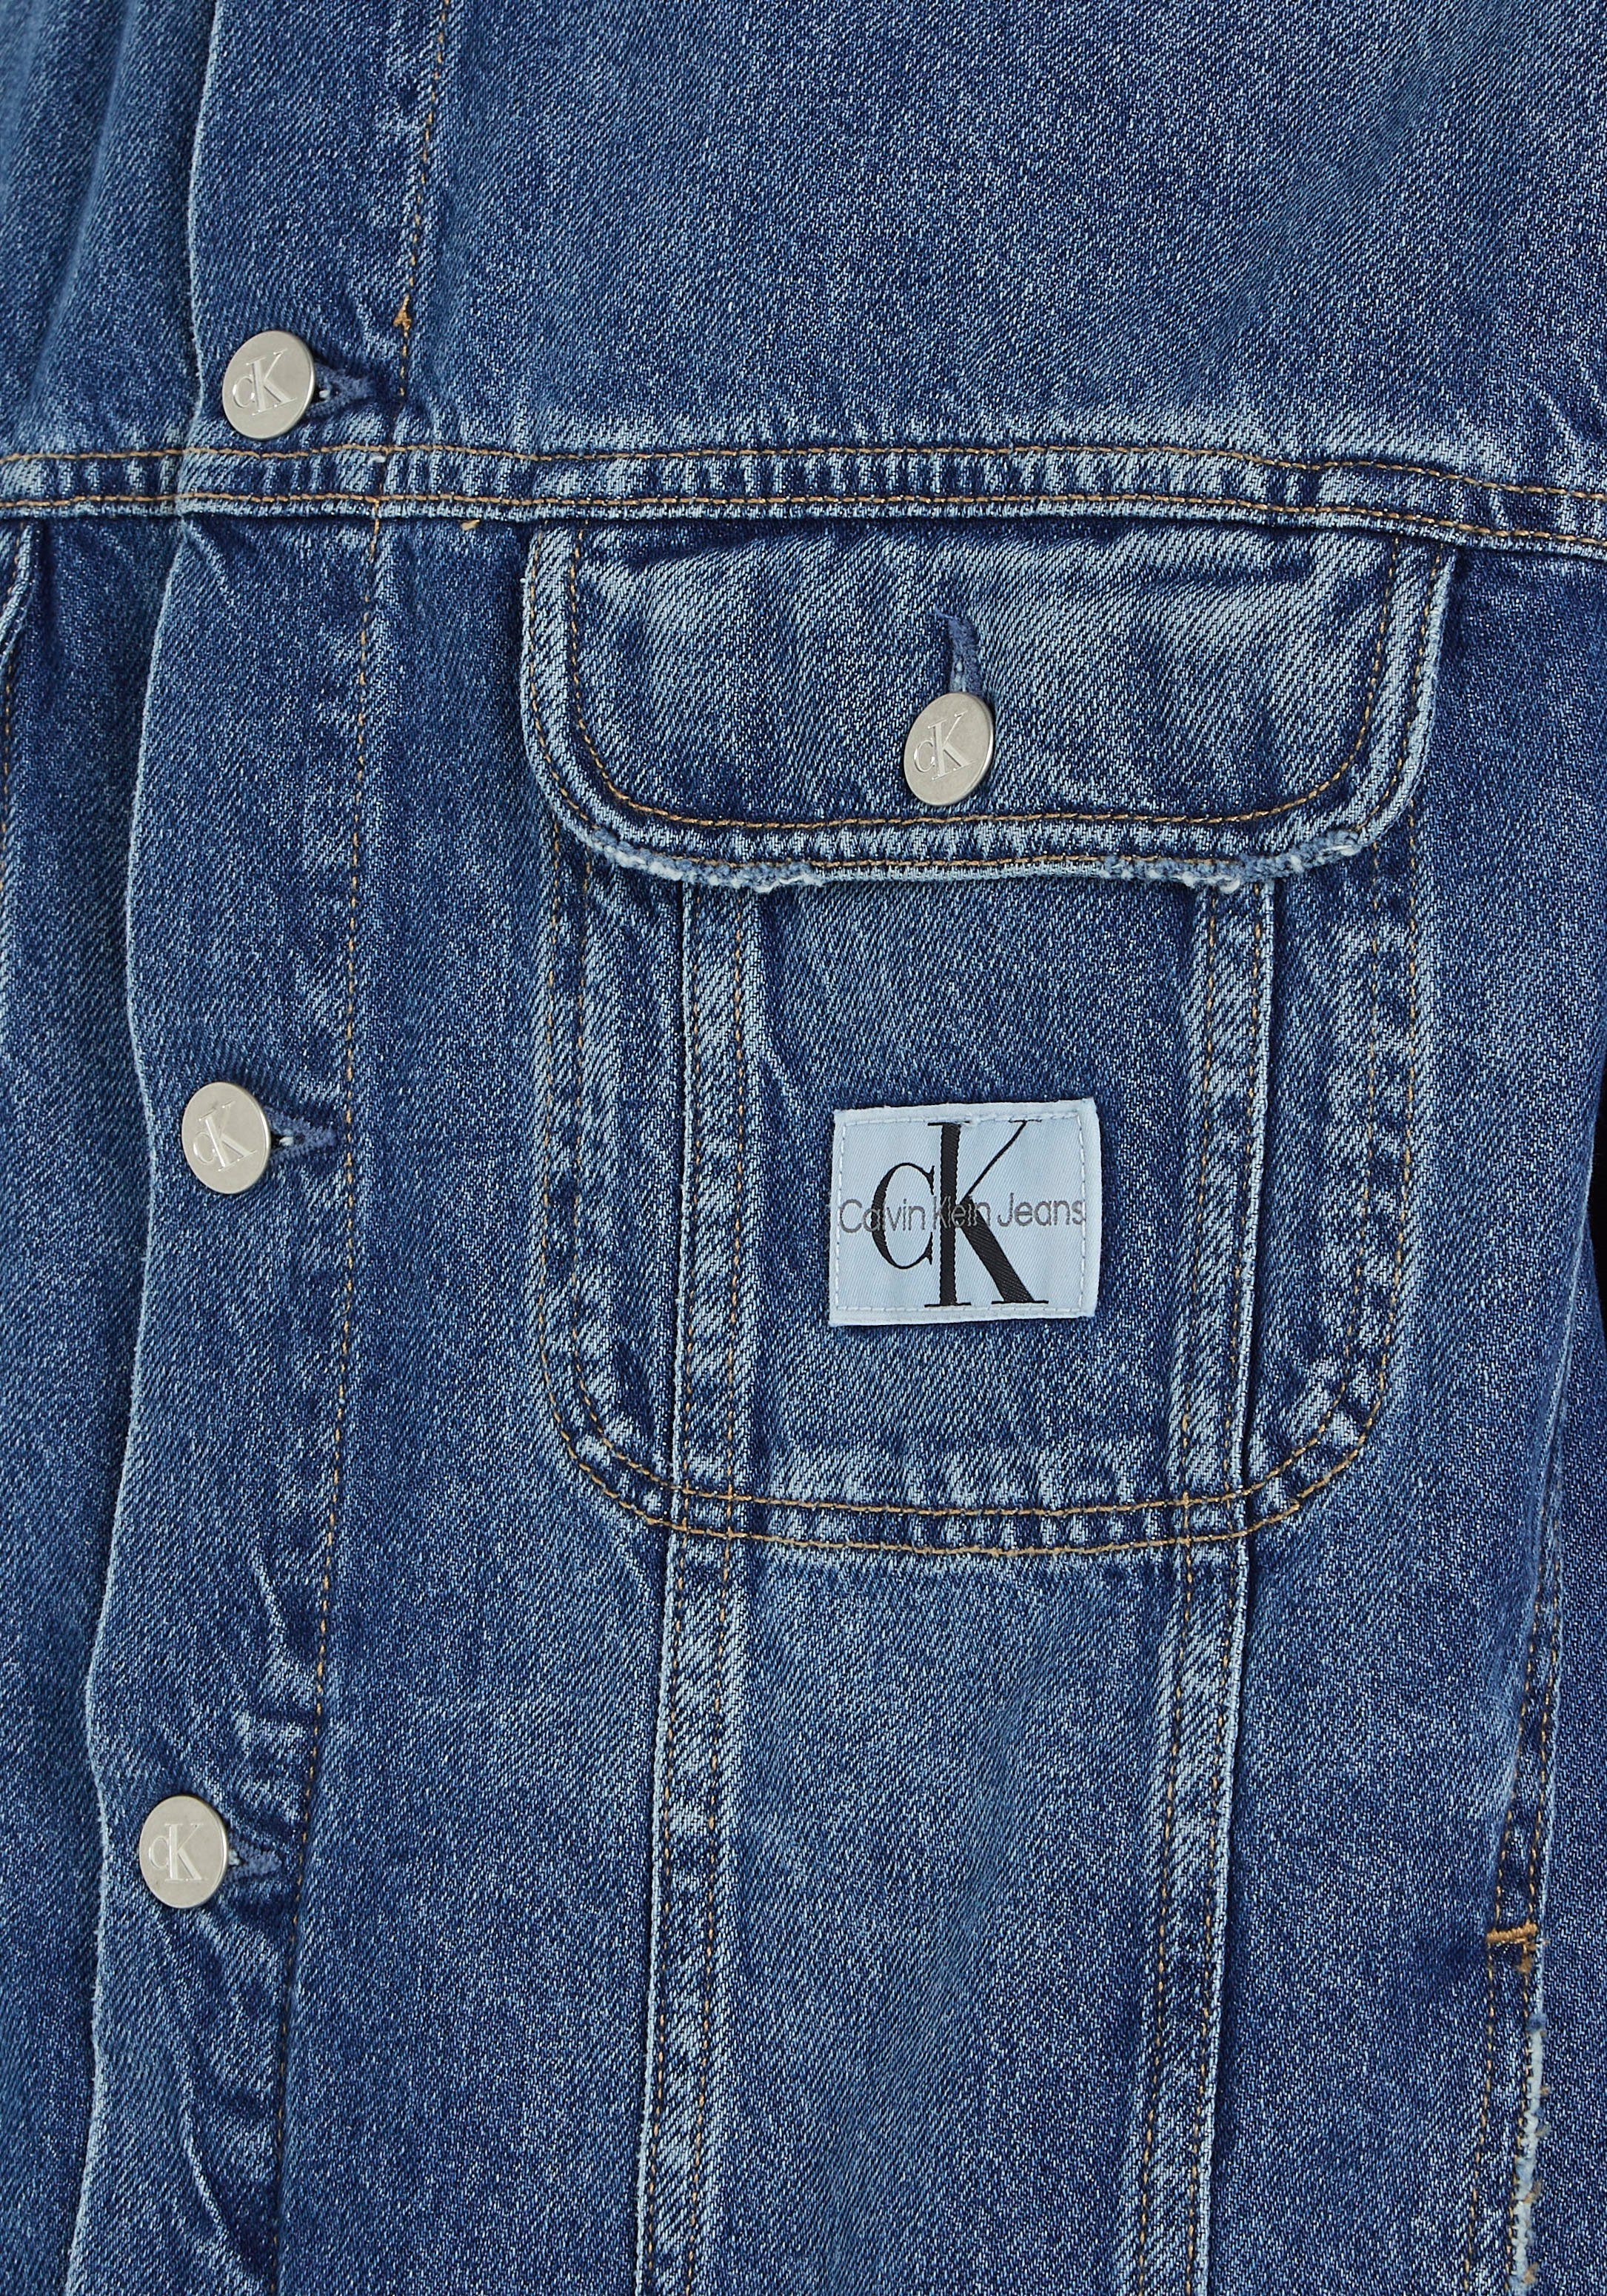 Calvin Klein Jeans 90S REGULAR DENIM Jeansjacke JACKET